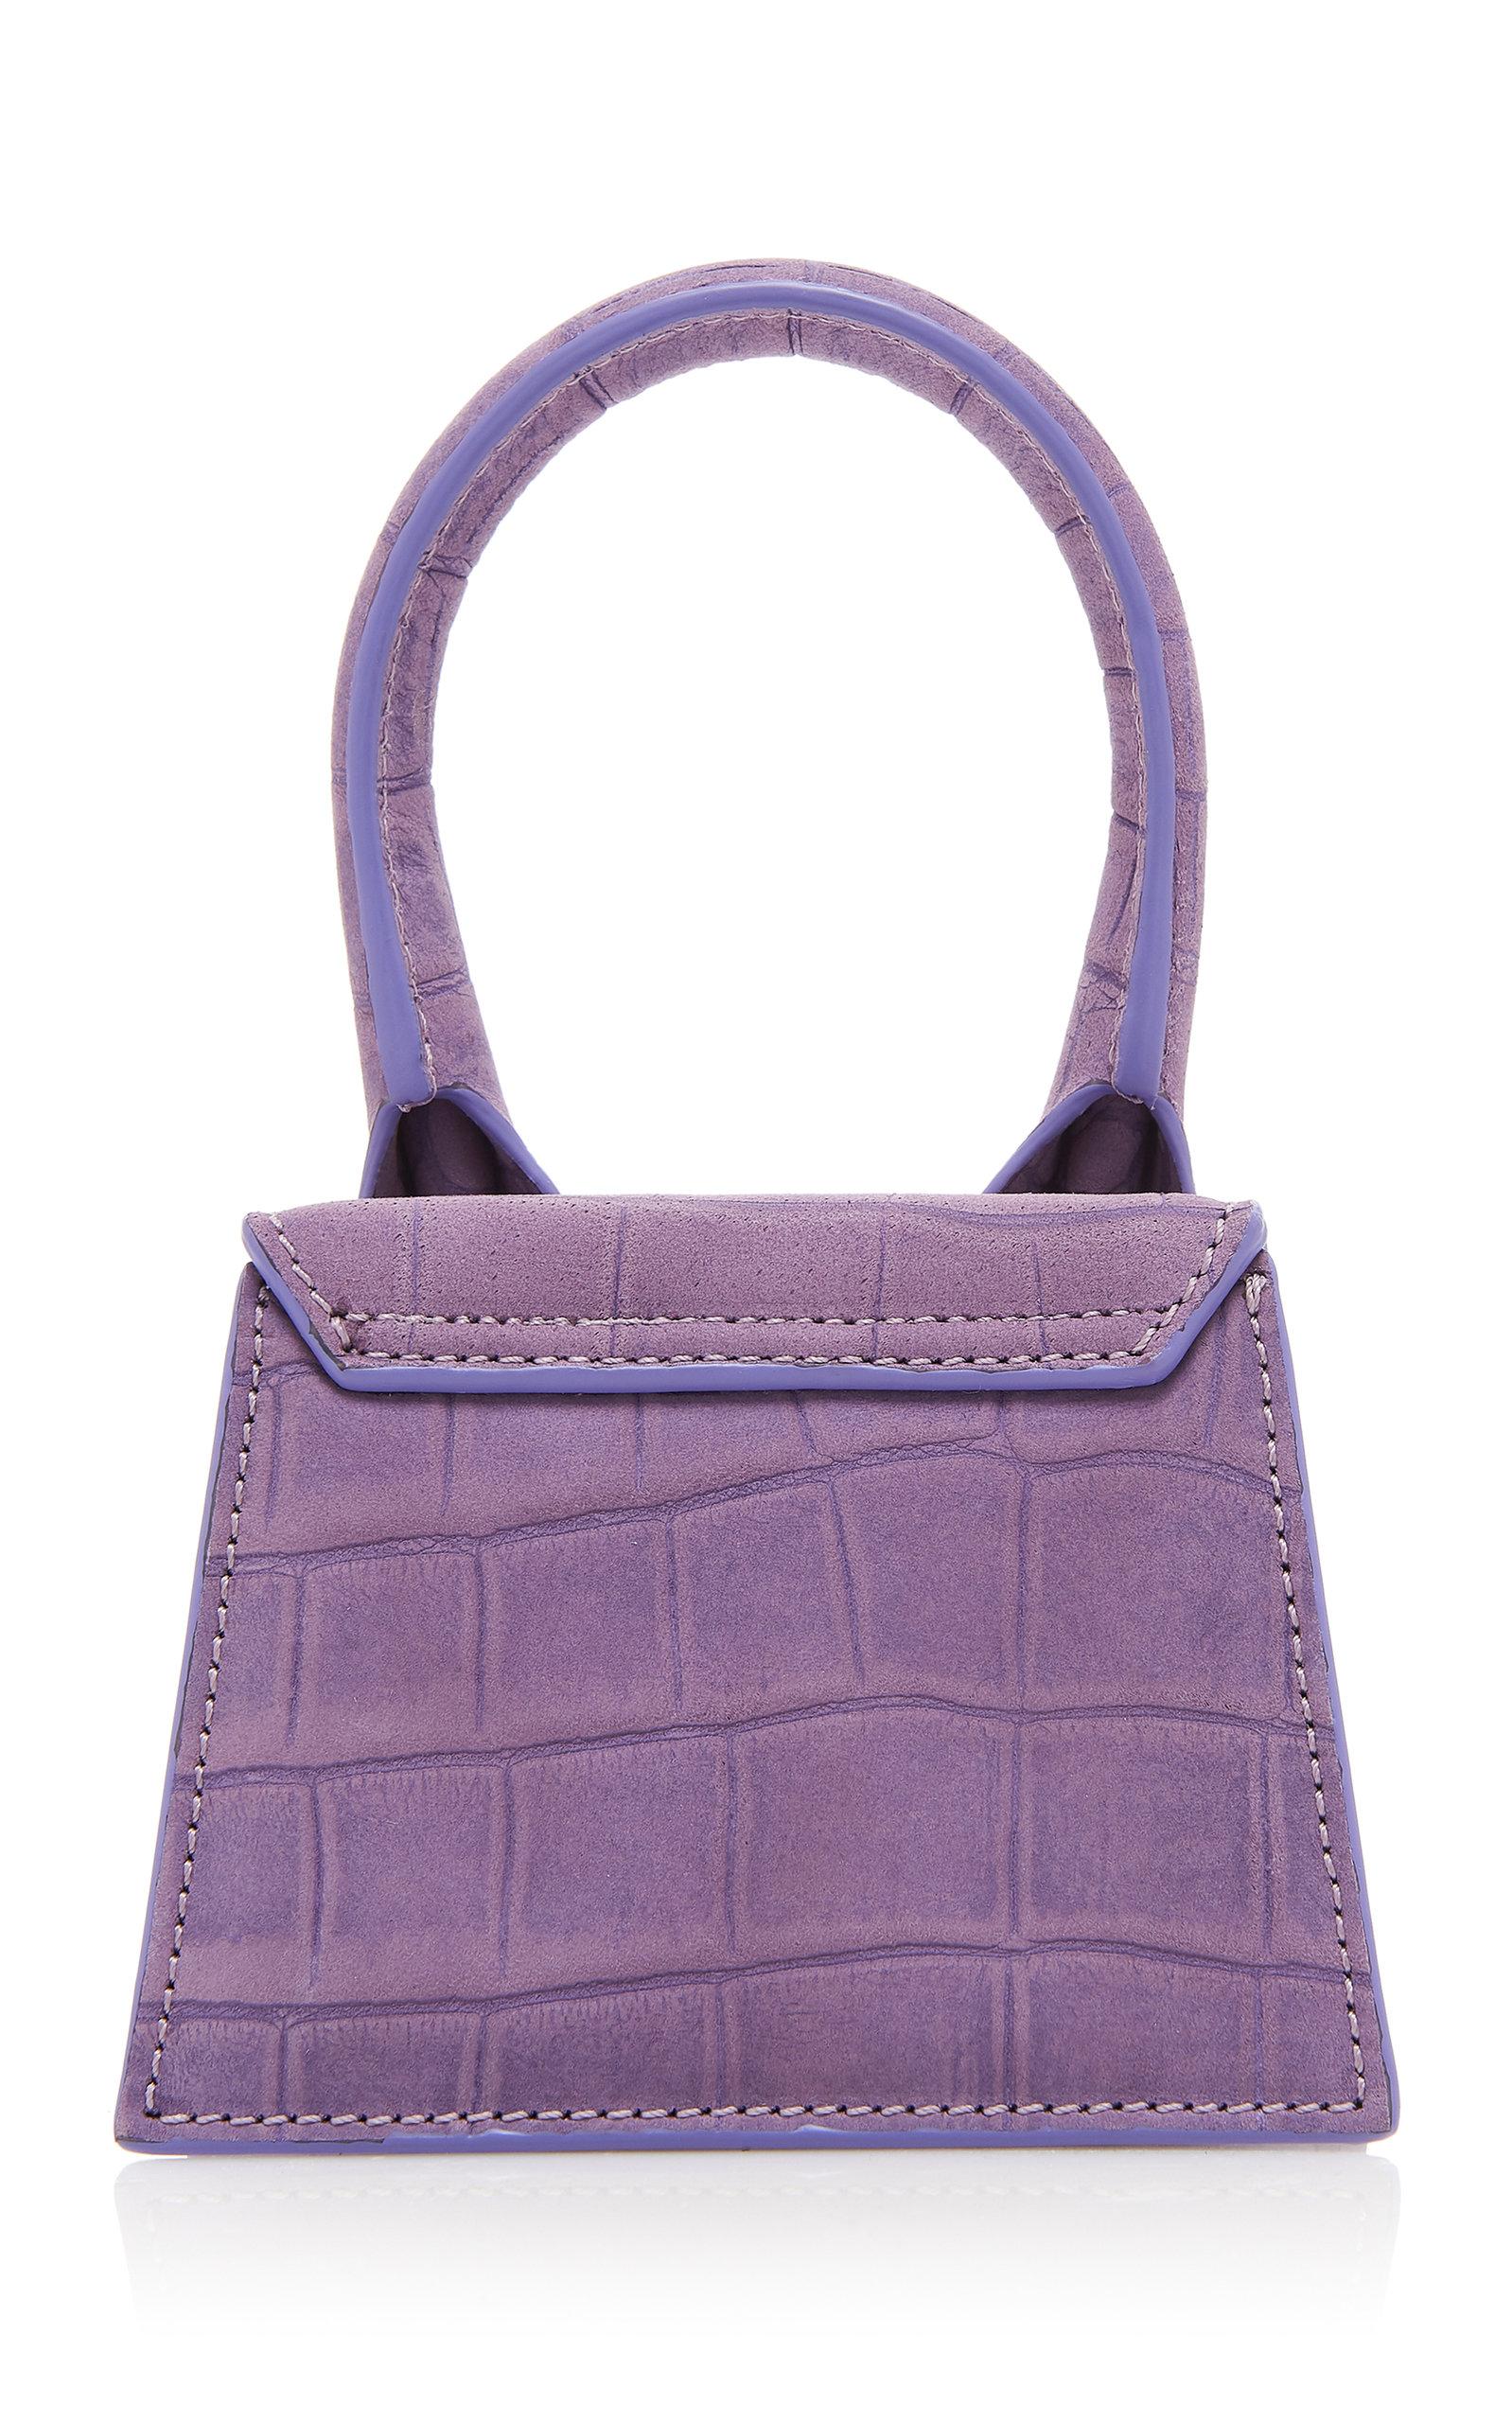 Jacquemus Le Chiquito Croc-effect Leather Top Handle Bag in Purple - Lyst